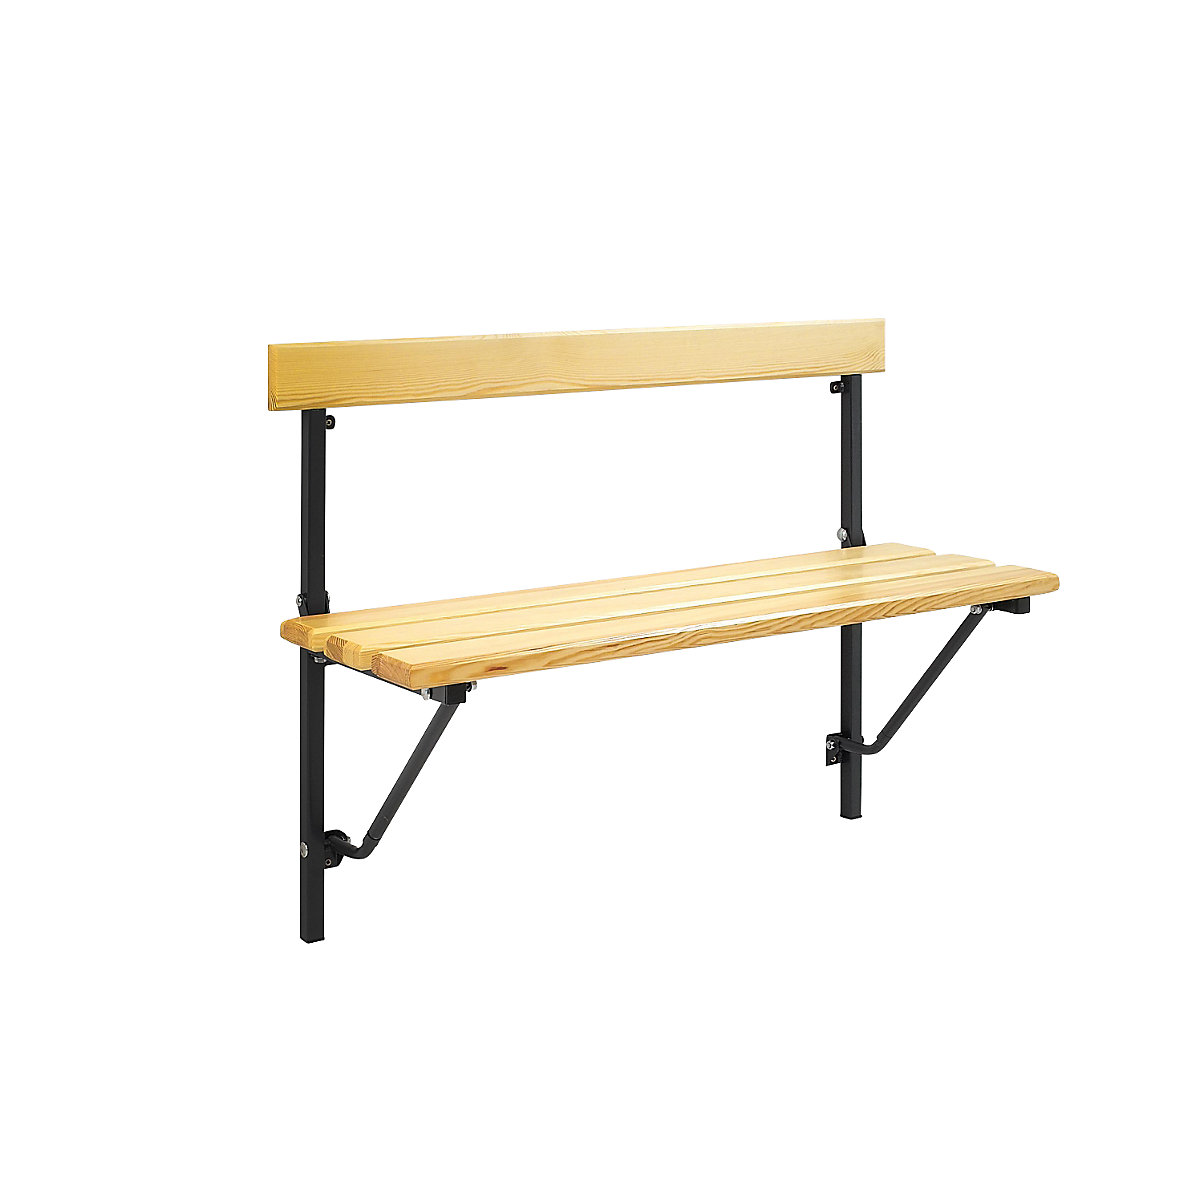 Sypro – Folding wall-mounted bench